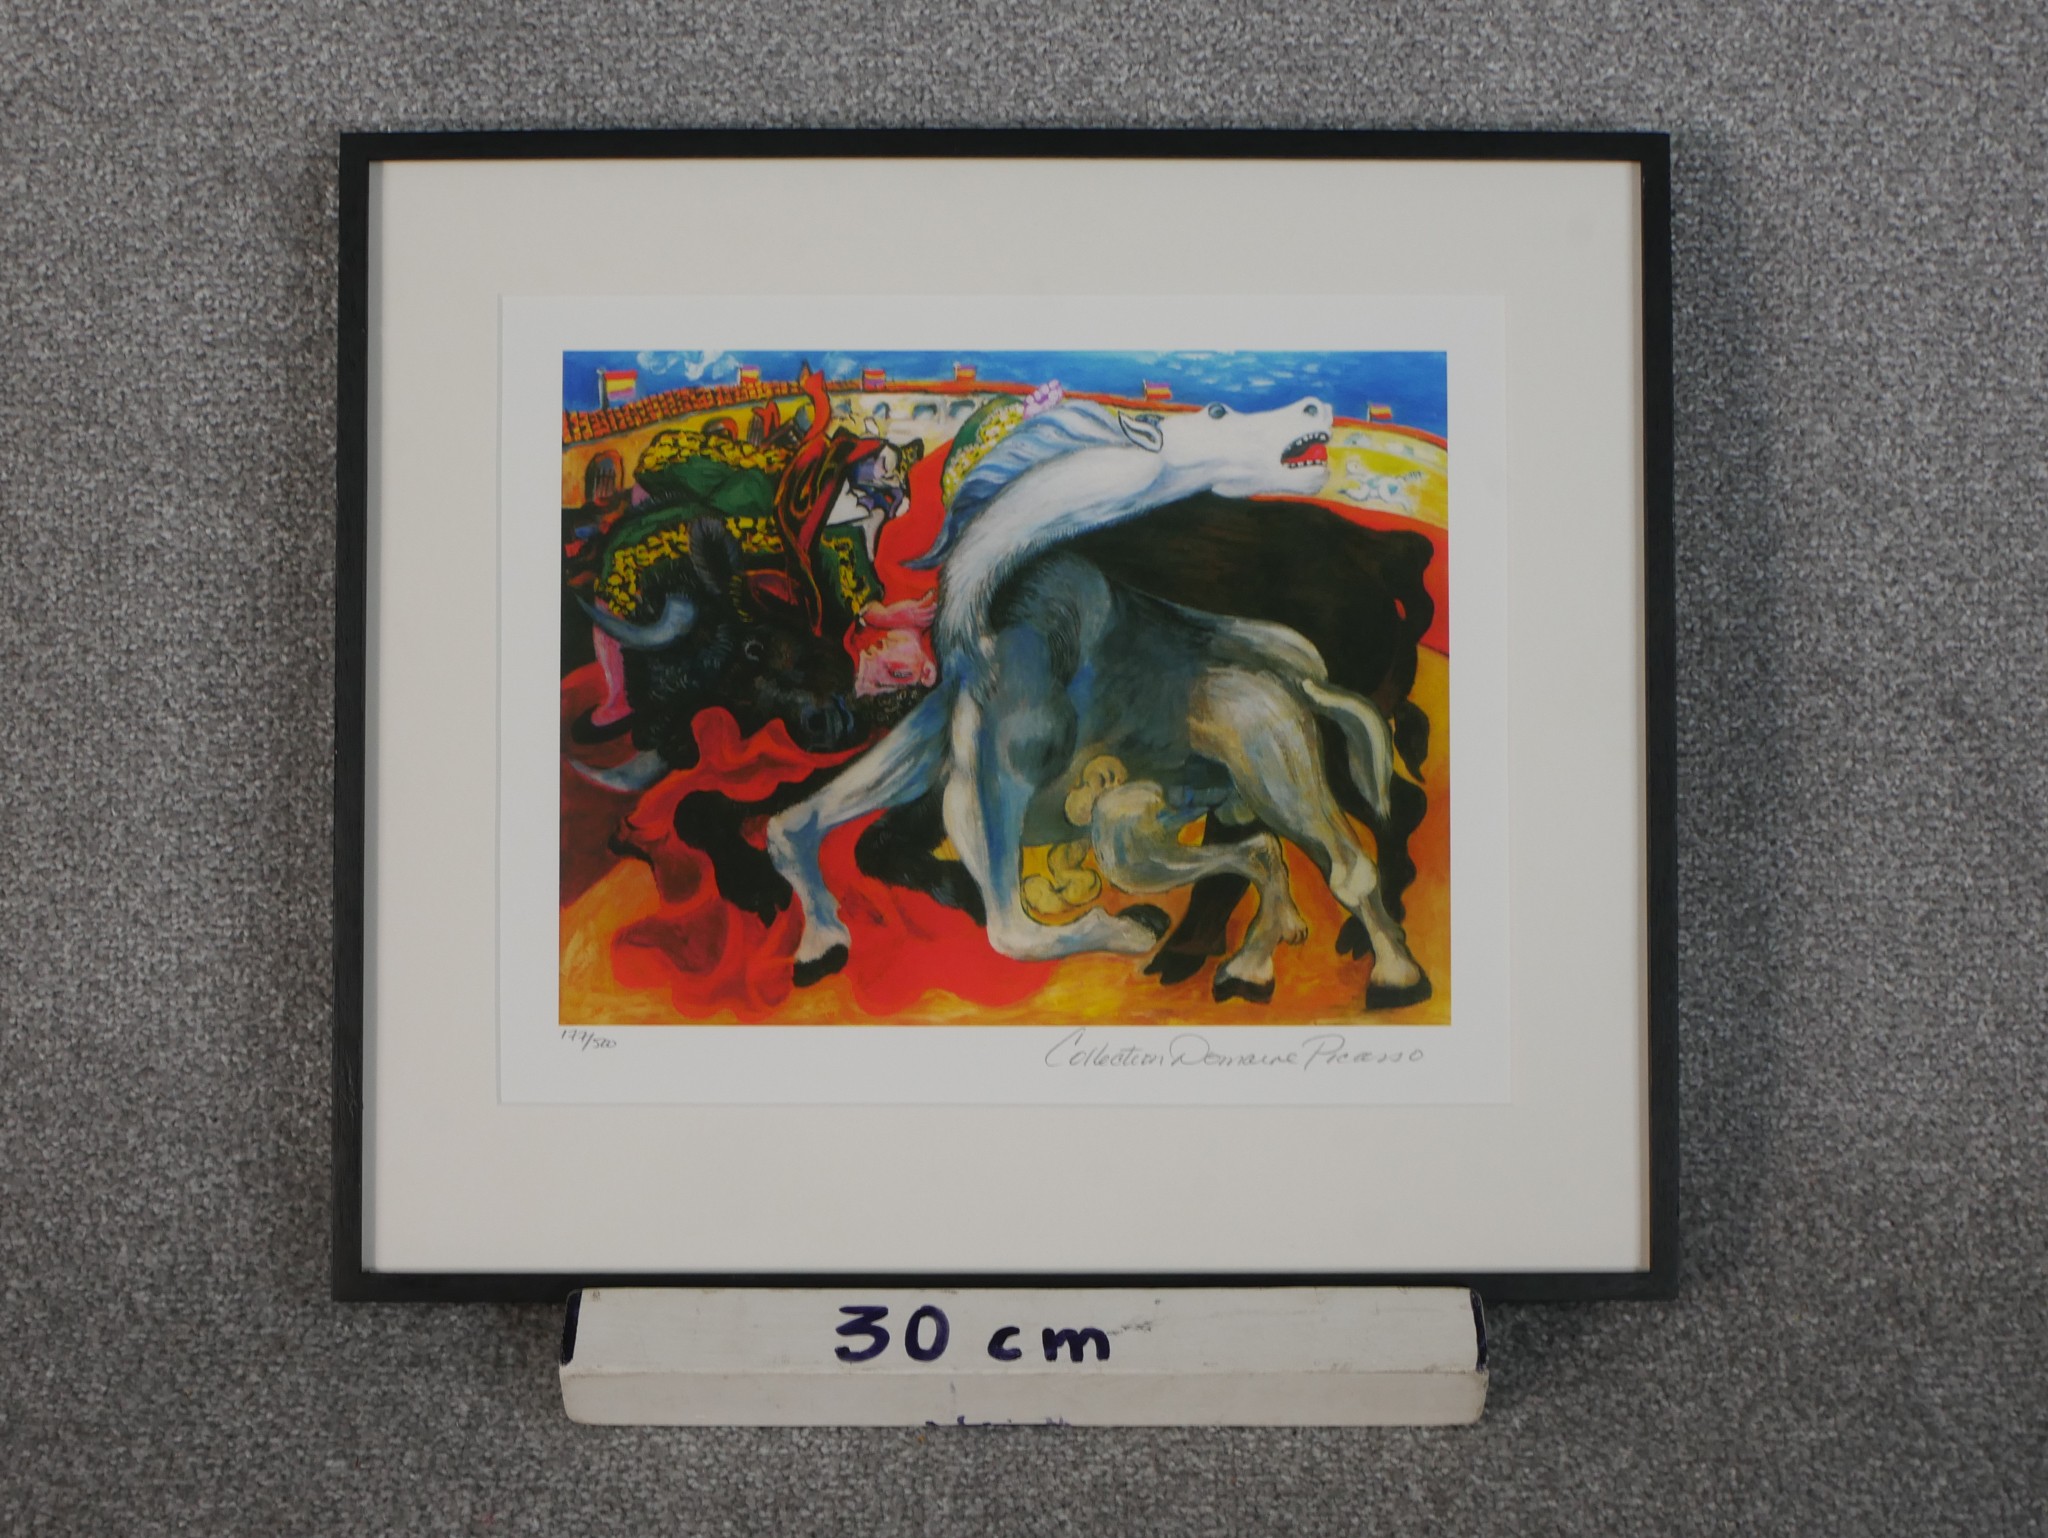 After Pablo Picasso, Corrida: la mort du torero (Corrida: Death of the Toreador), 1979-82, Giclée - Image 3 of 6